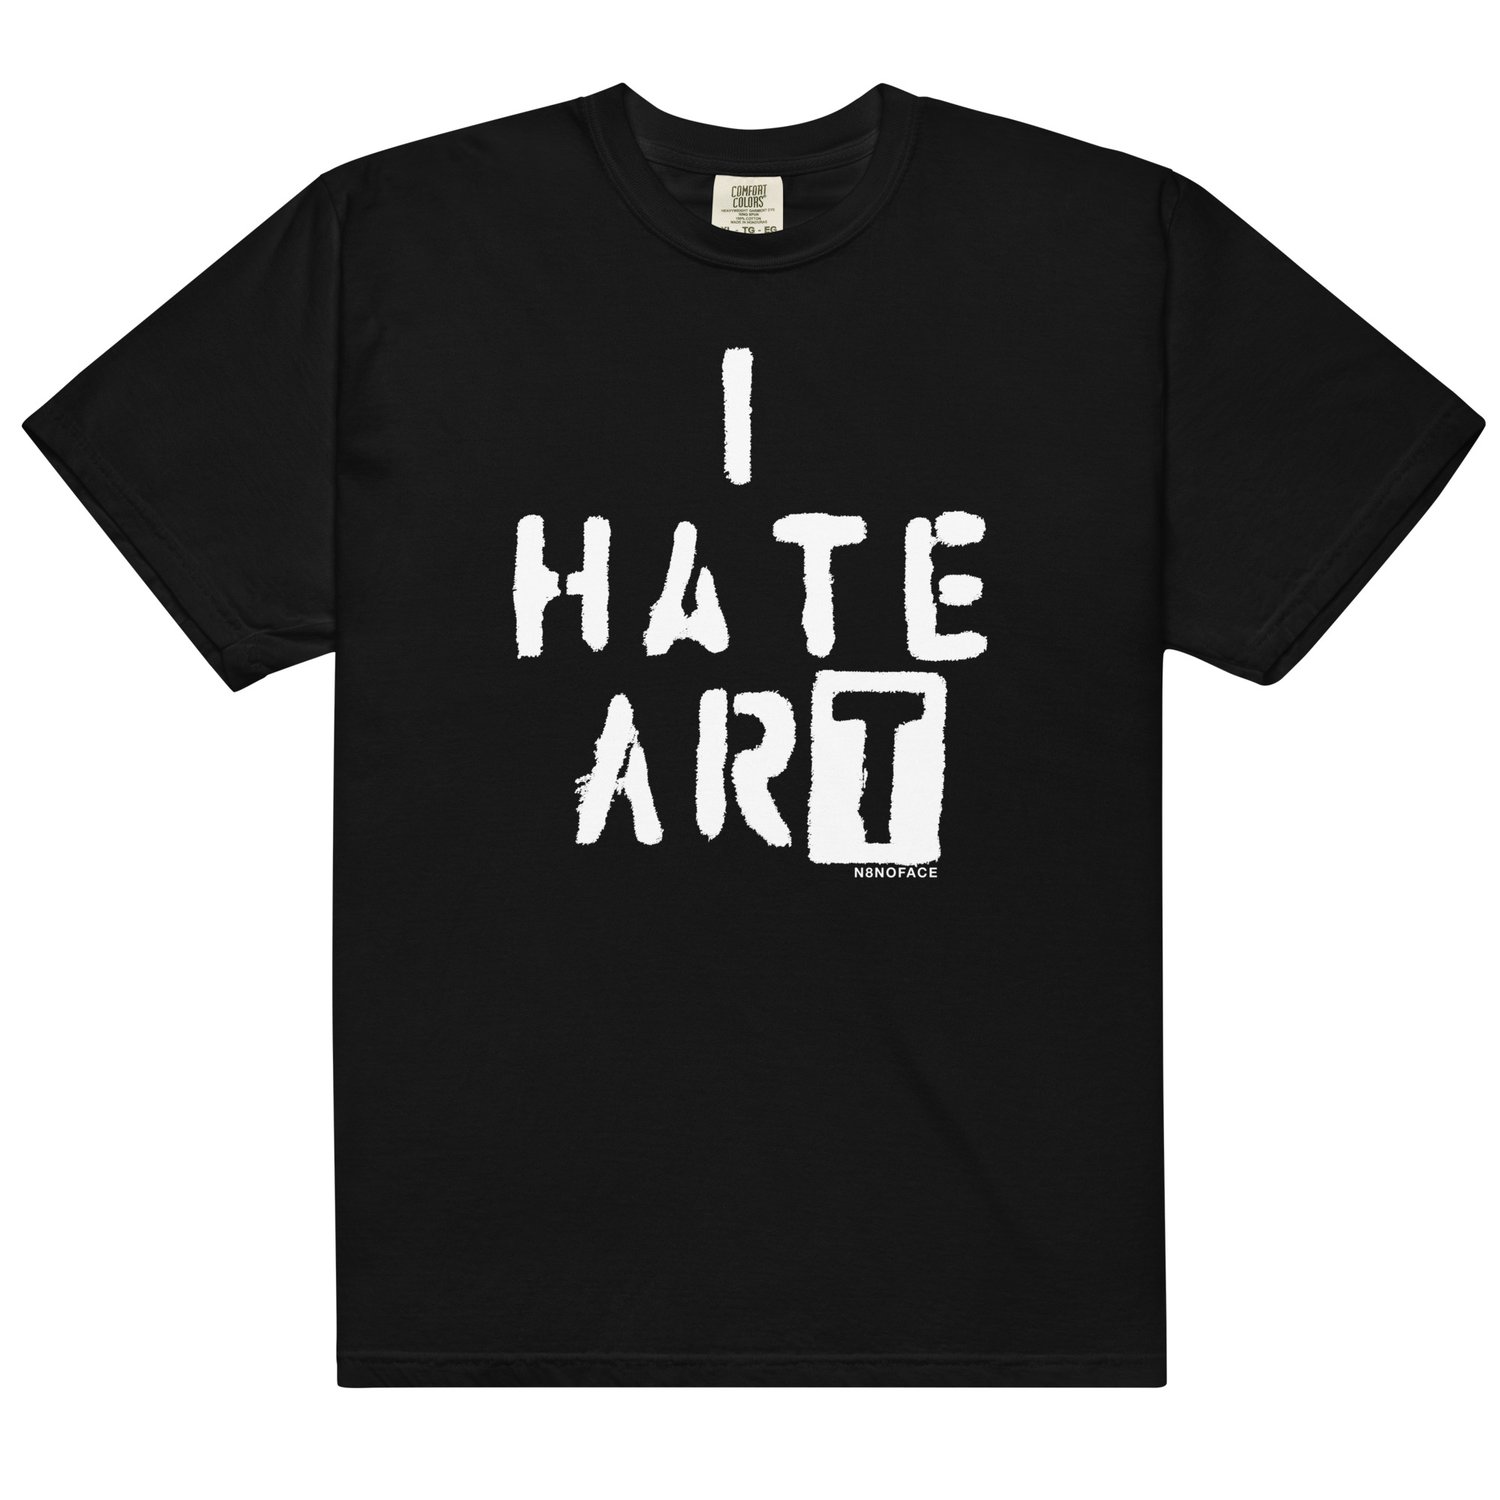 I HATE ART by N8NOFACE Men’s garment-dyed heavyweight t-shirt (BLACK)